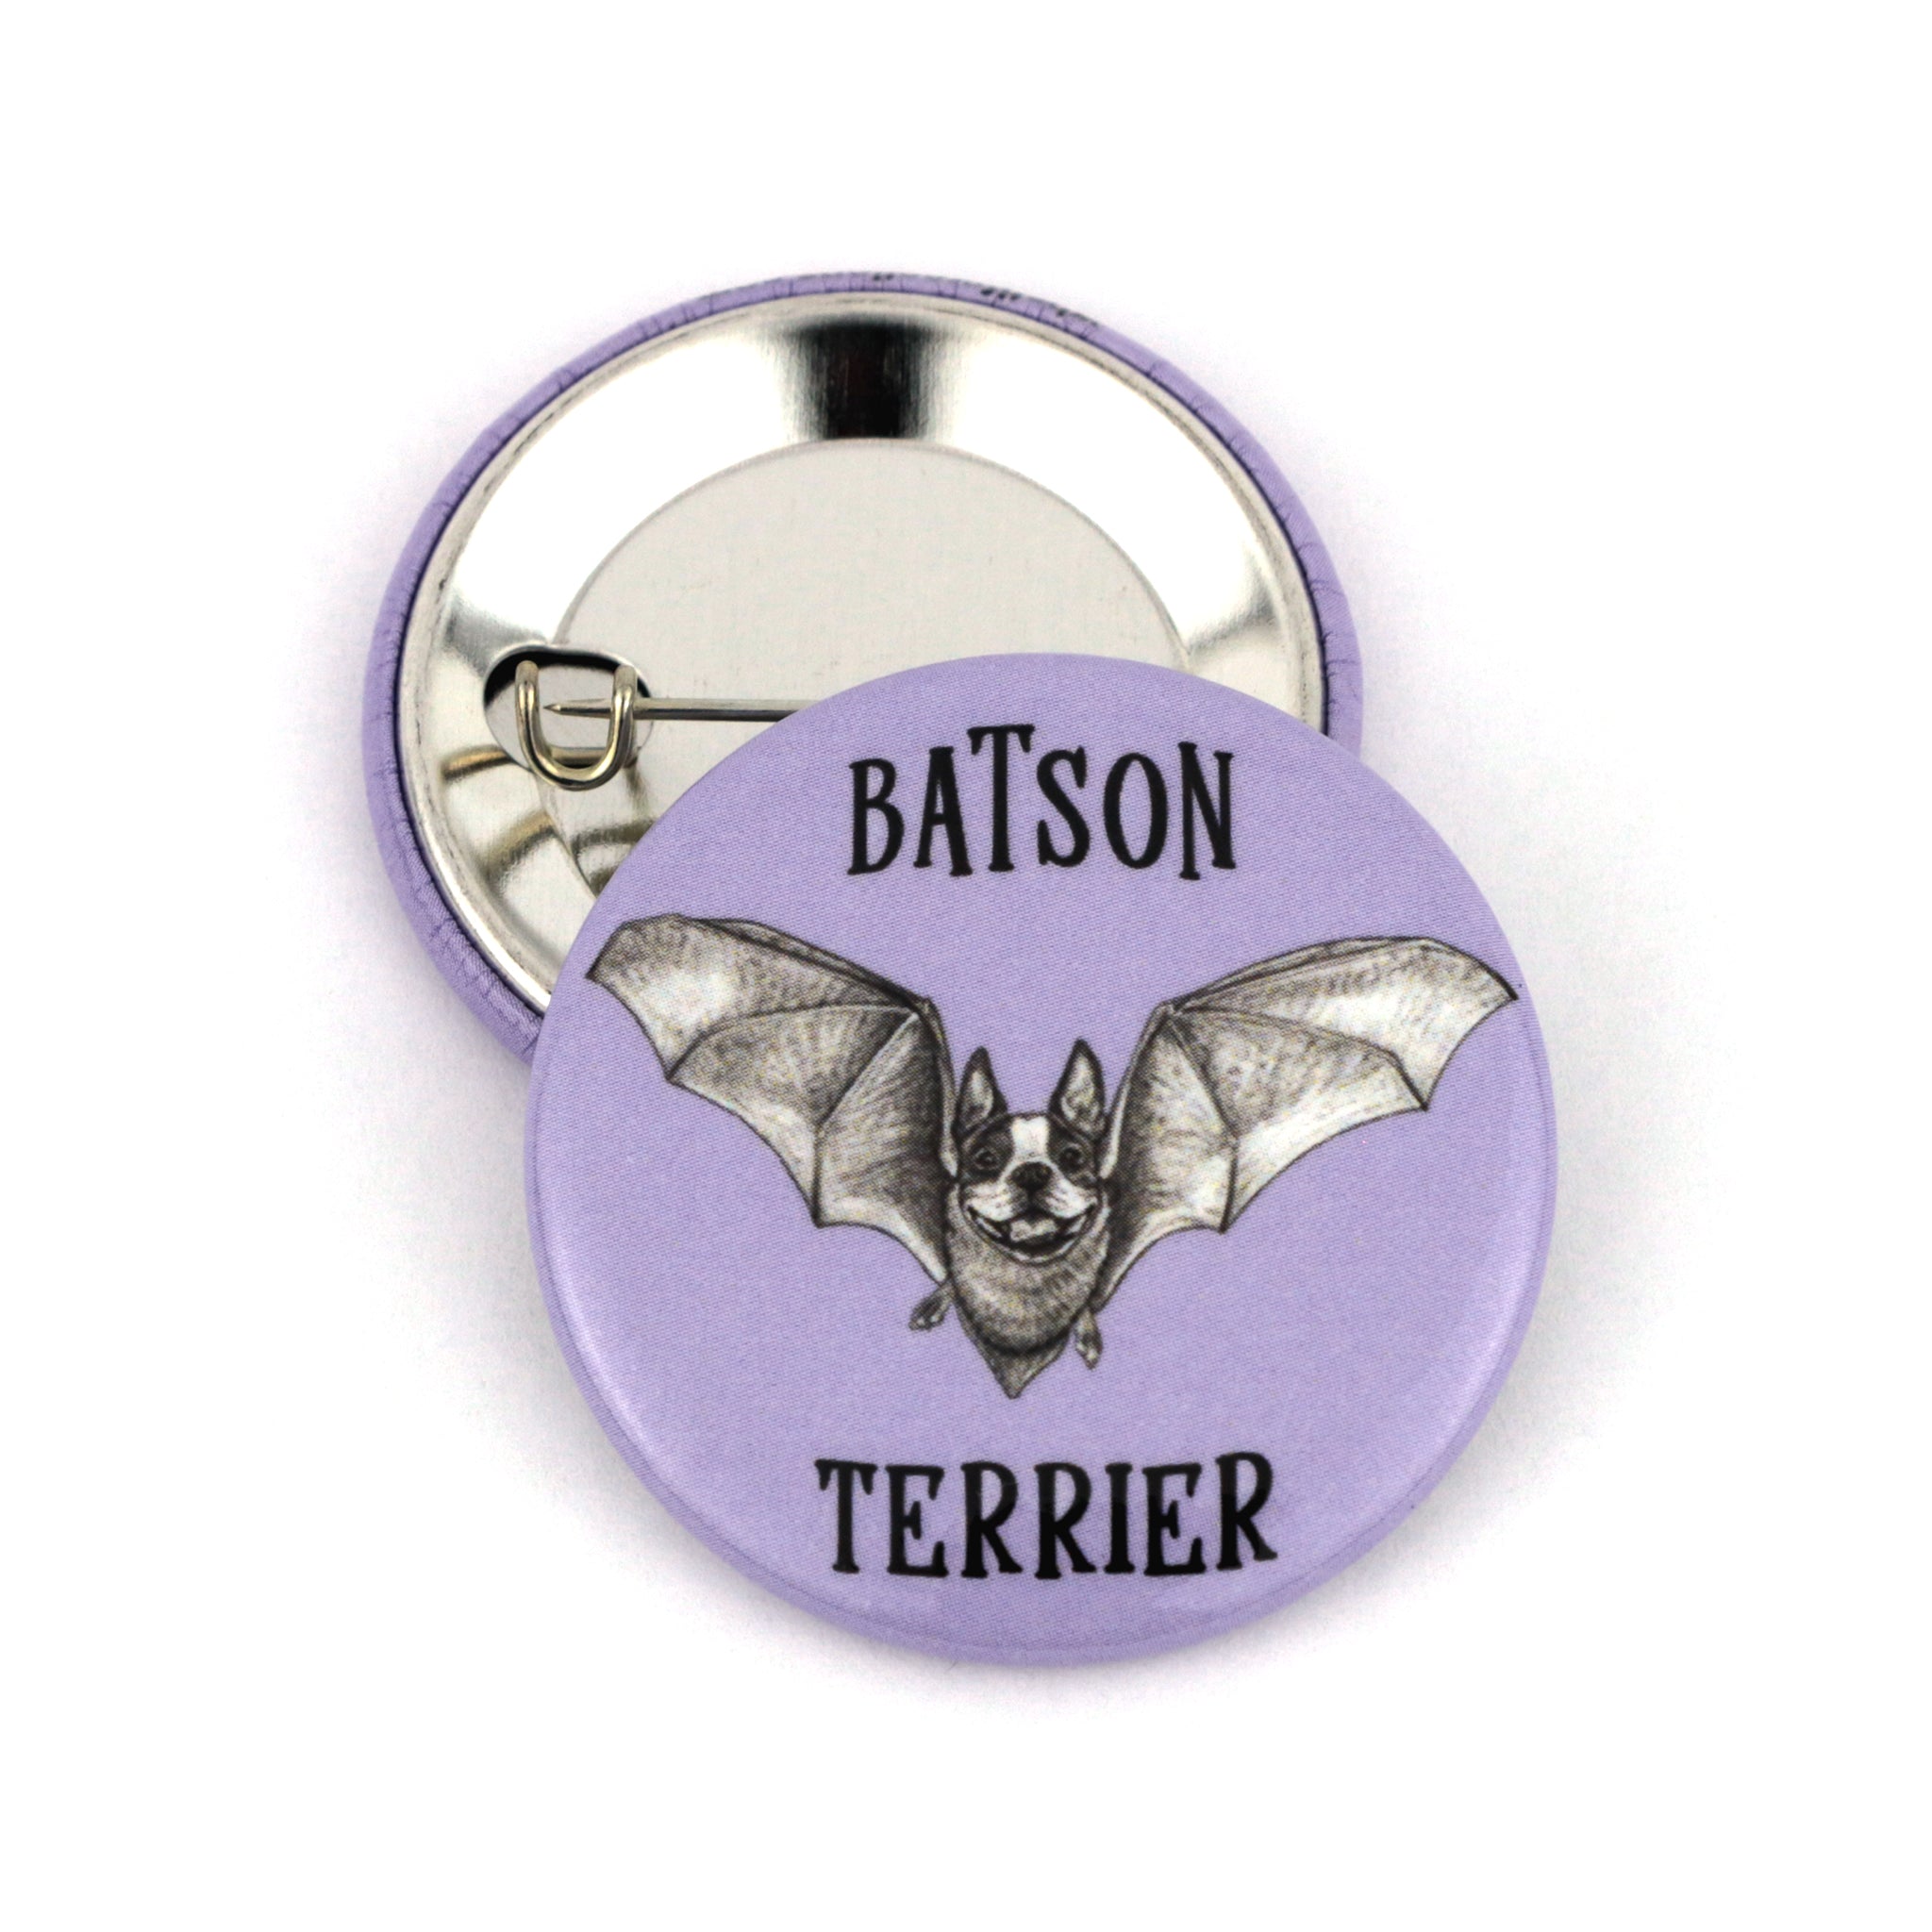 Batson Terrier 1.5" Pinback Button